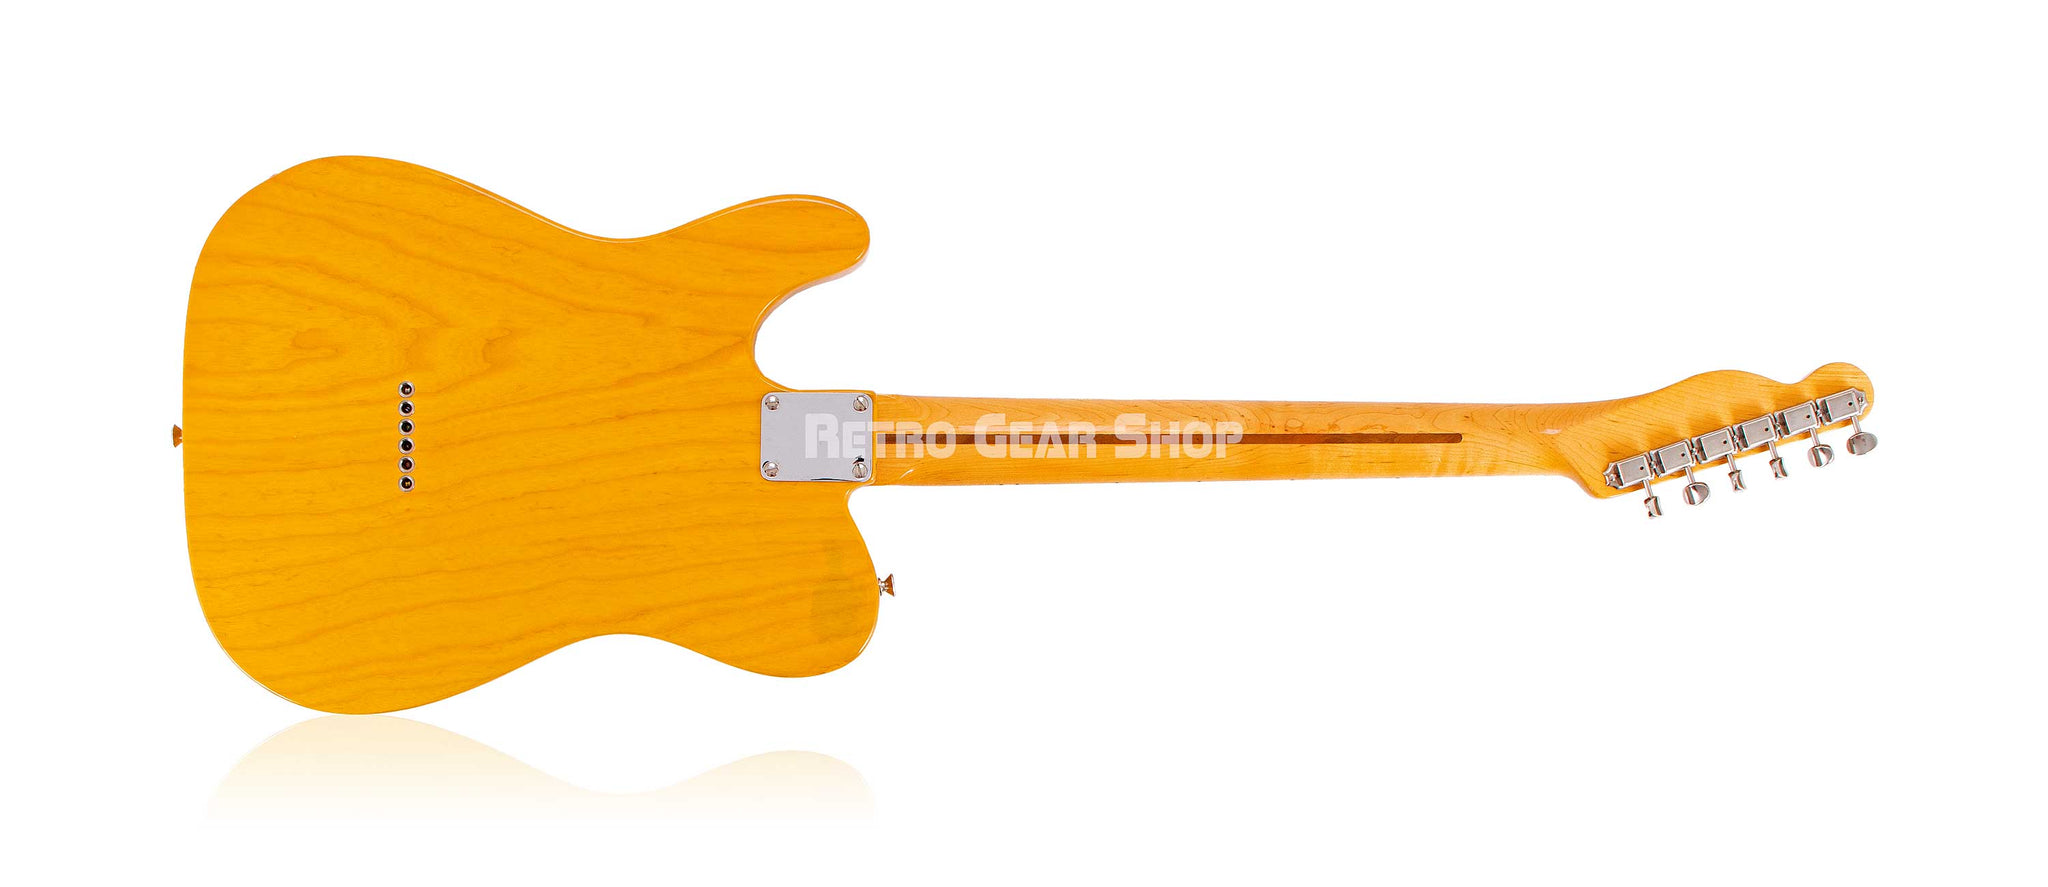 Fender Telecaster 52 Reissue Electric Guitar Rear